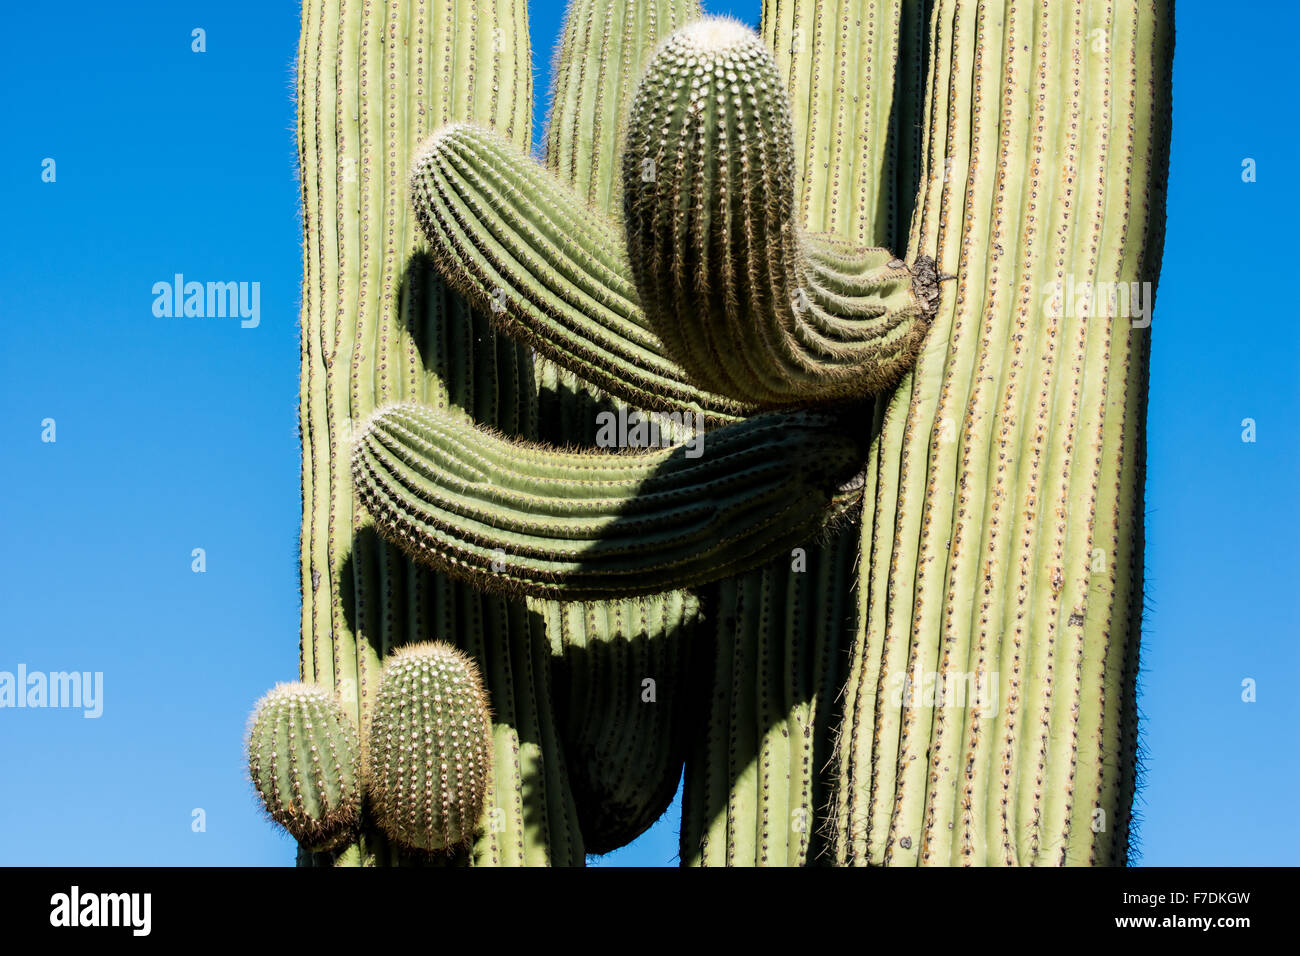 Zweige von einem gigantischen Saguaro Kaktus (Carnegiea Gigantea) im Saguaro National Park, Tucson, Arizona, USA. Stockfoto